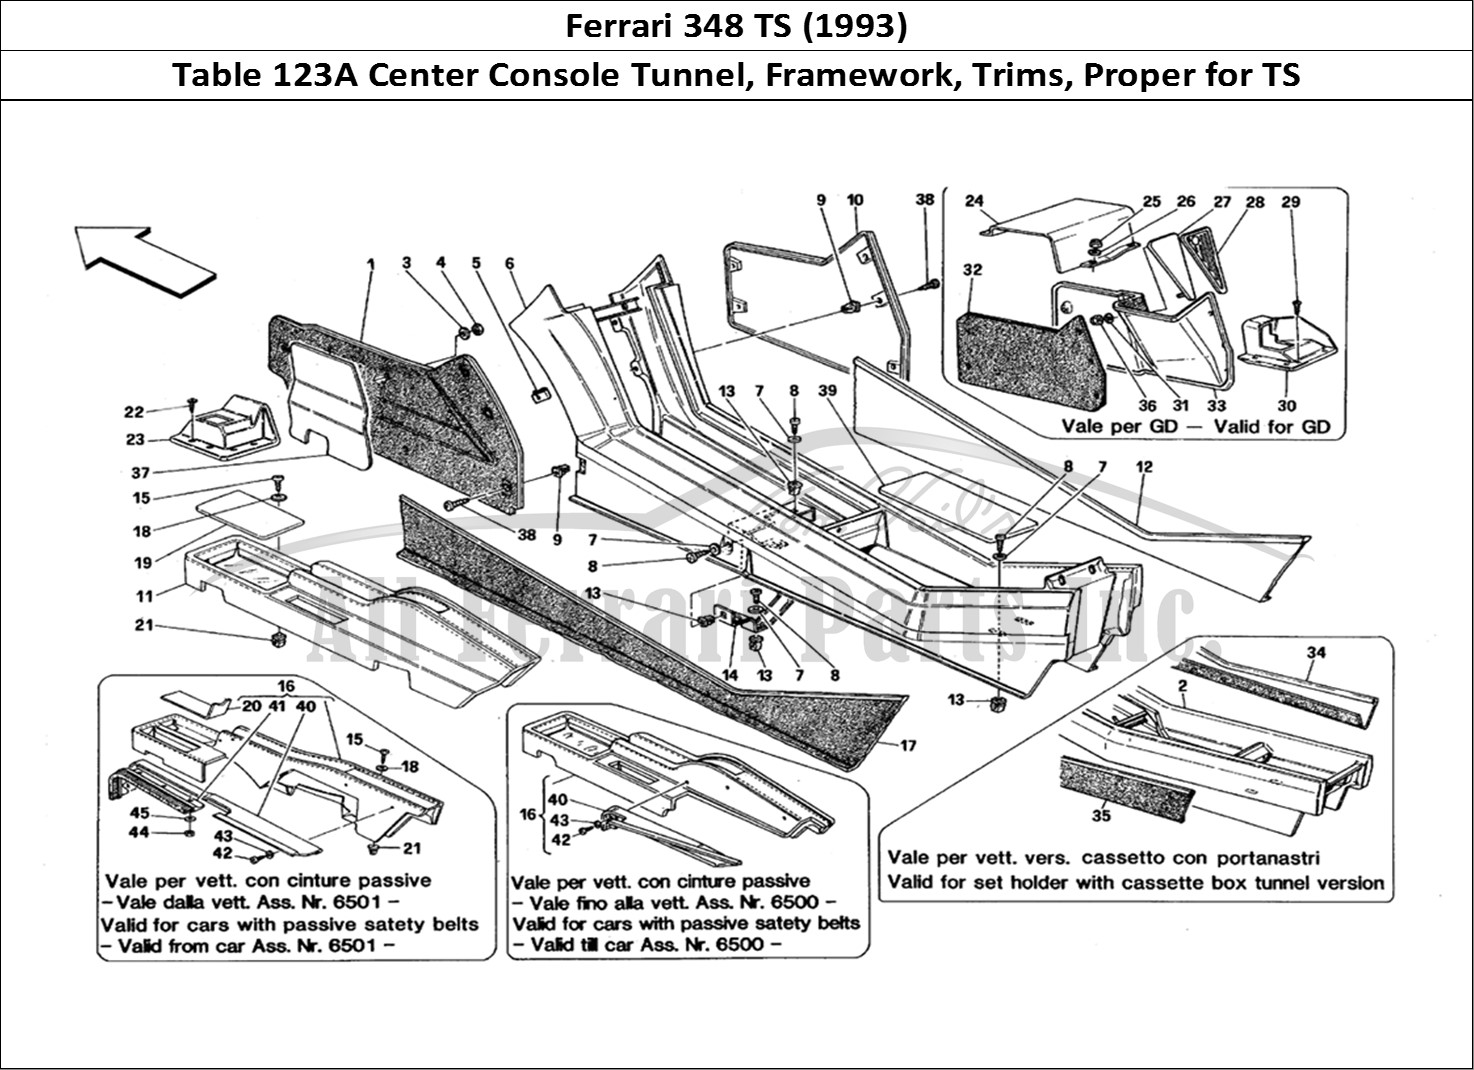 Ferrari Parts Ferrari 348 TB (1993) Page 123 Tunnel - Framework and Tr